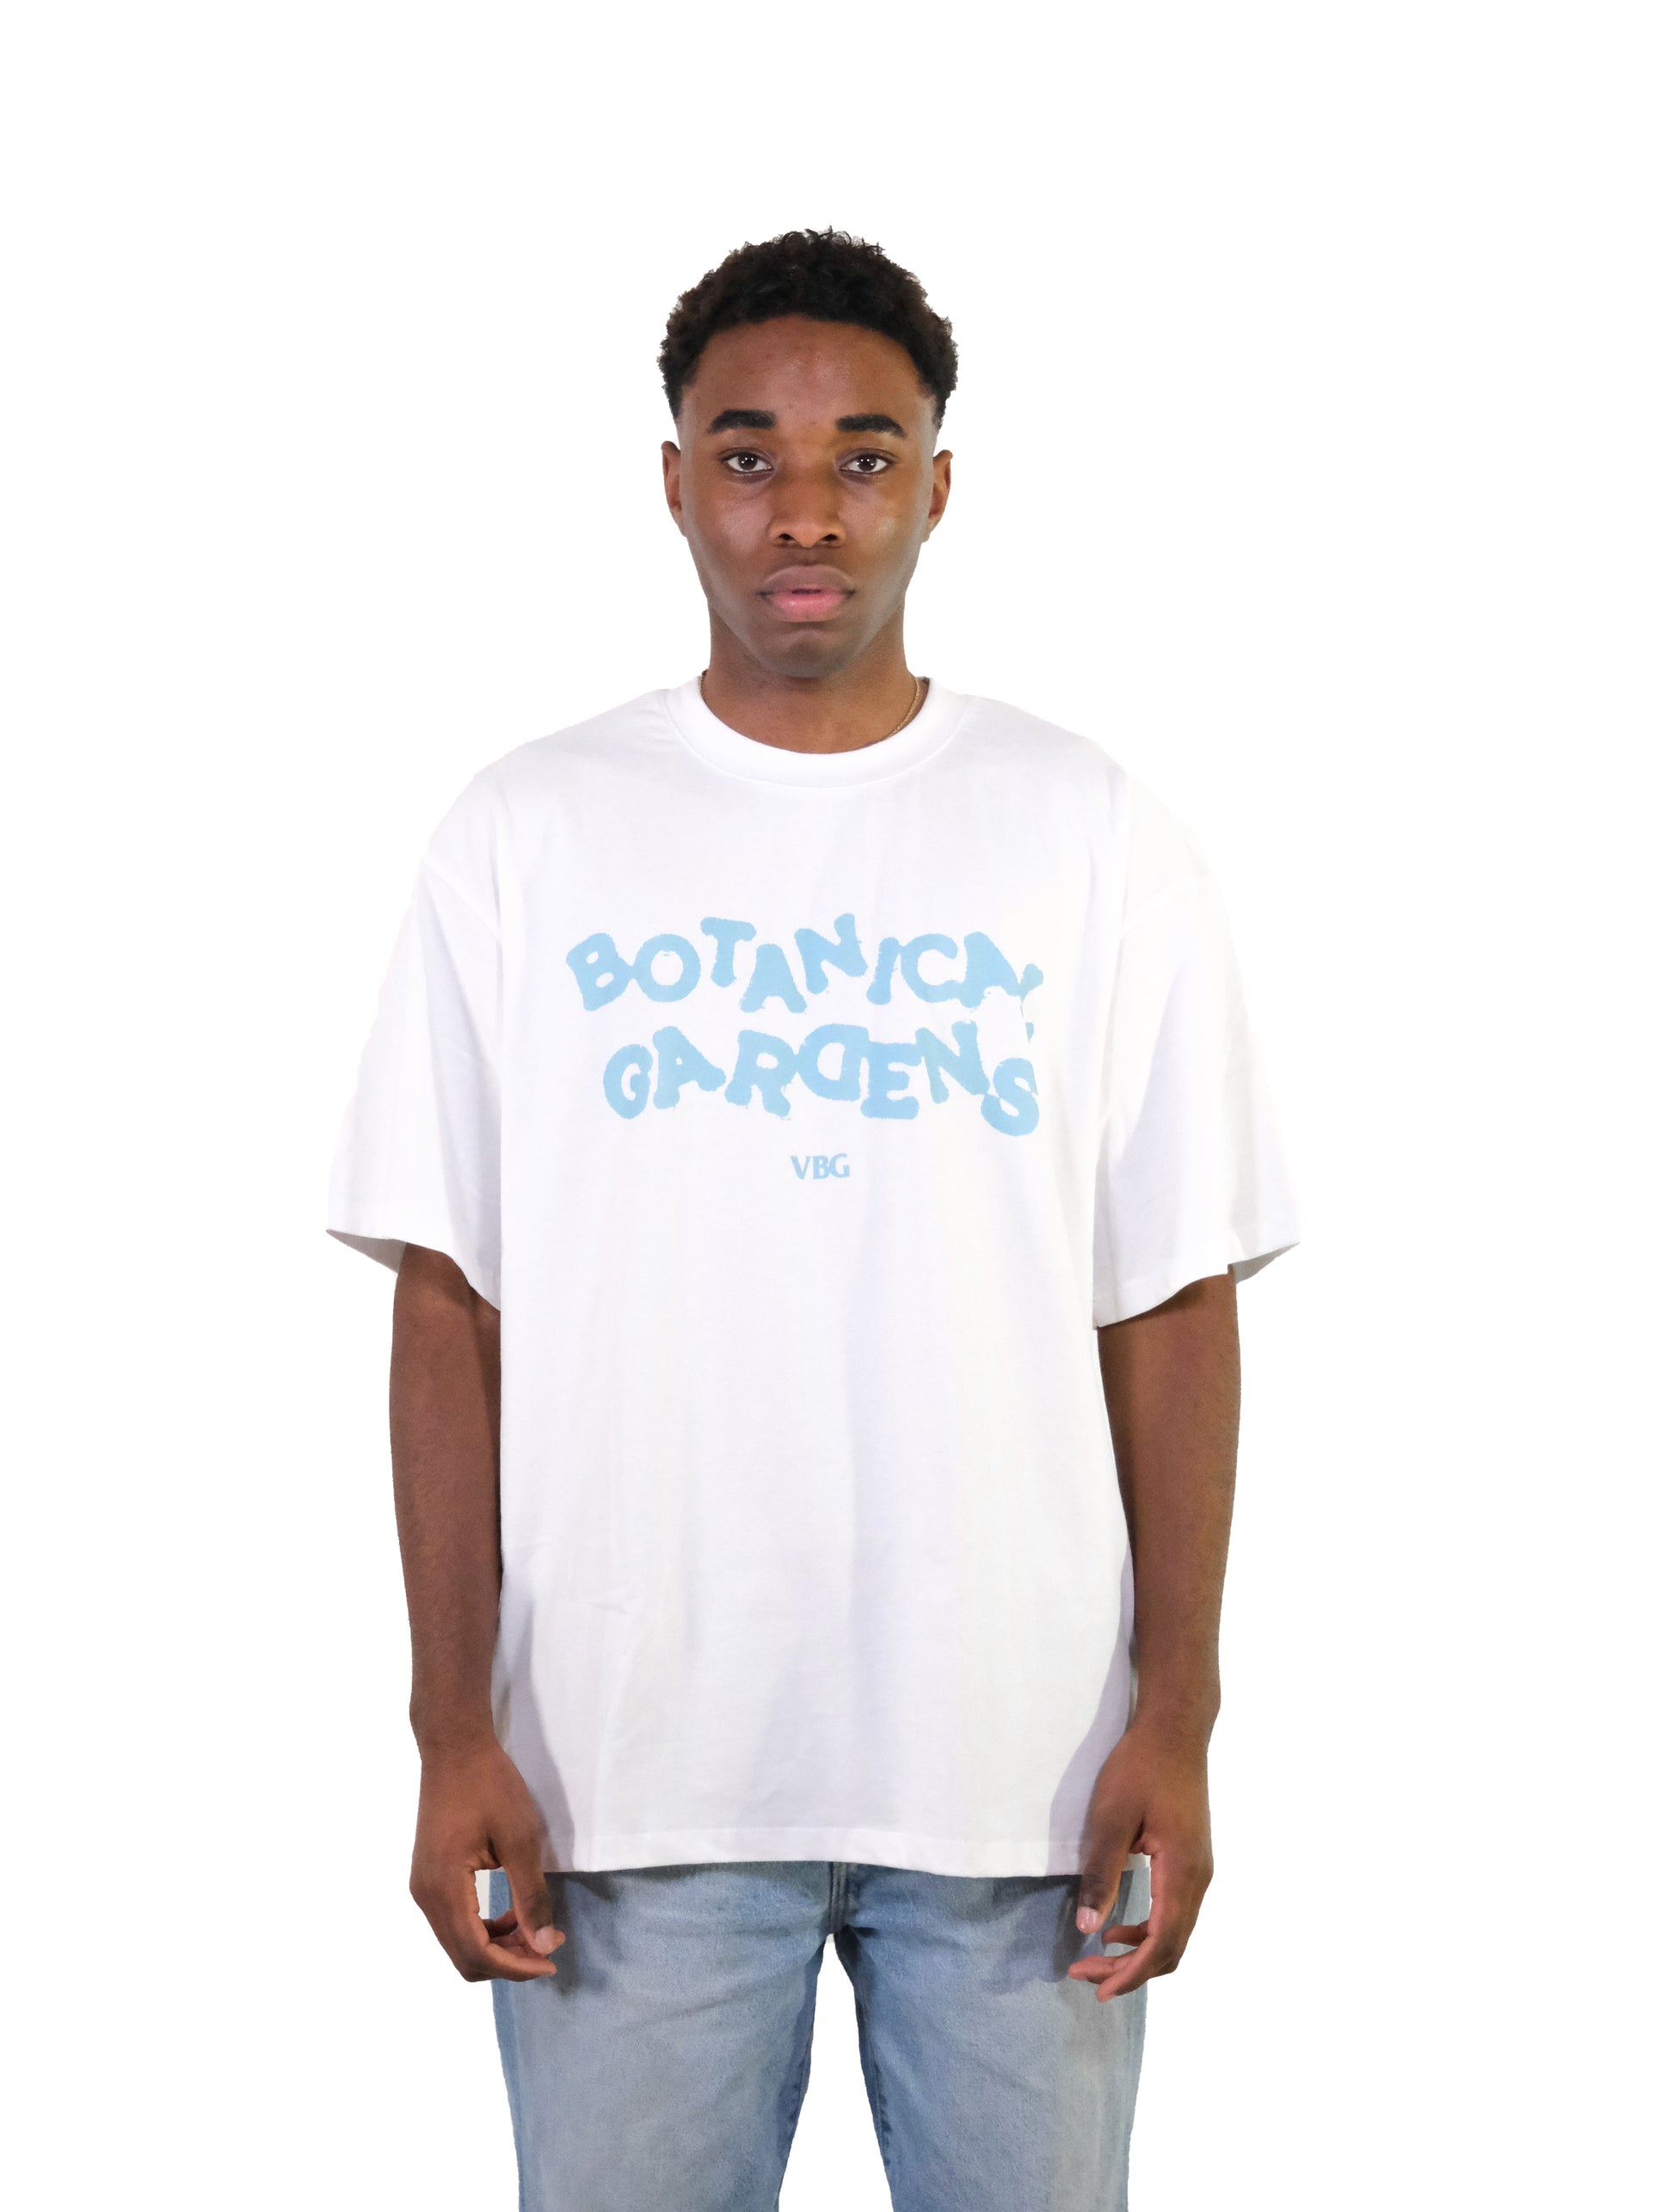 "Botanical Gardens" T-Shirt - White/Blue - VBG